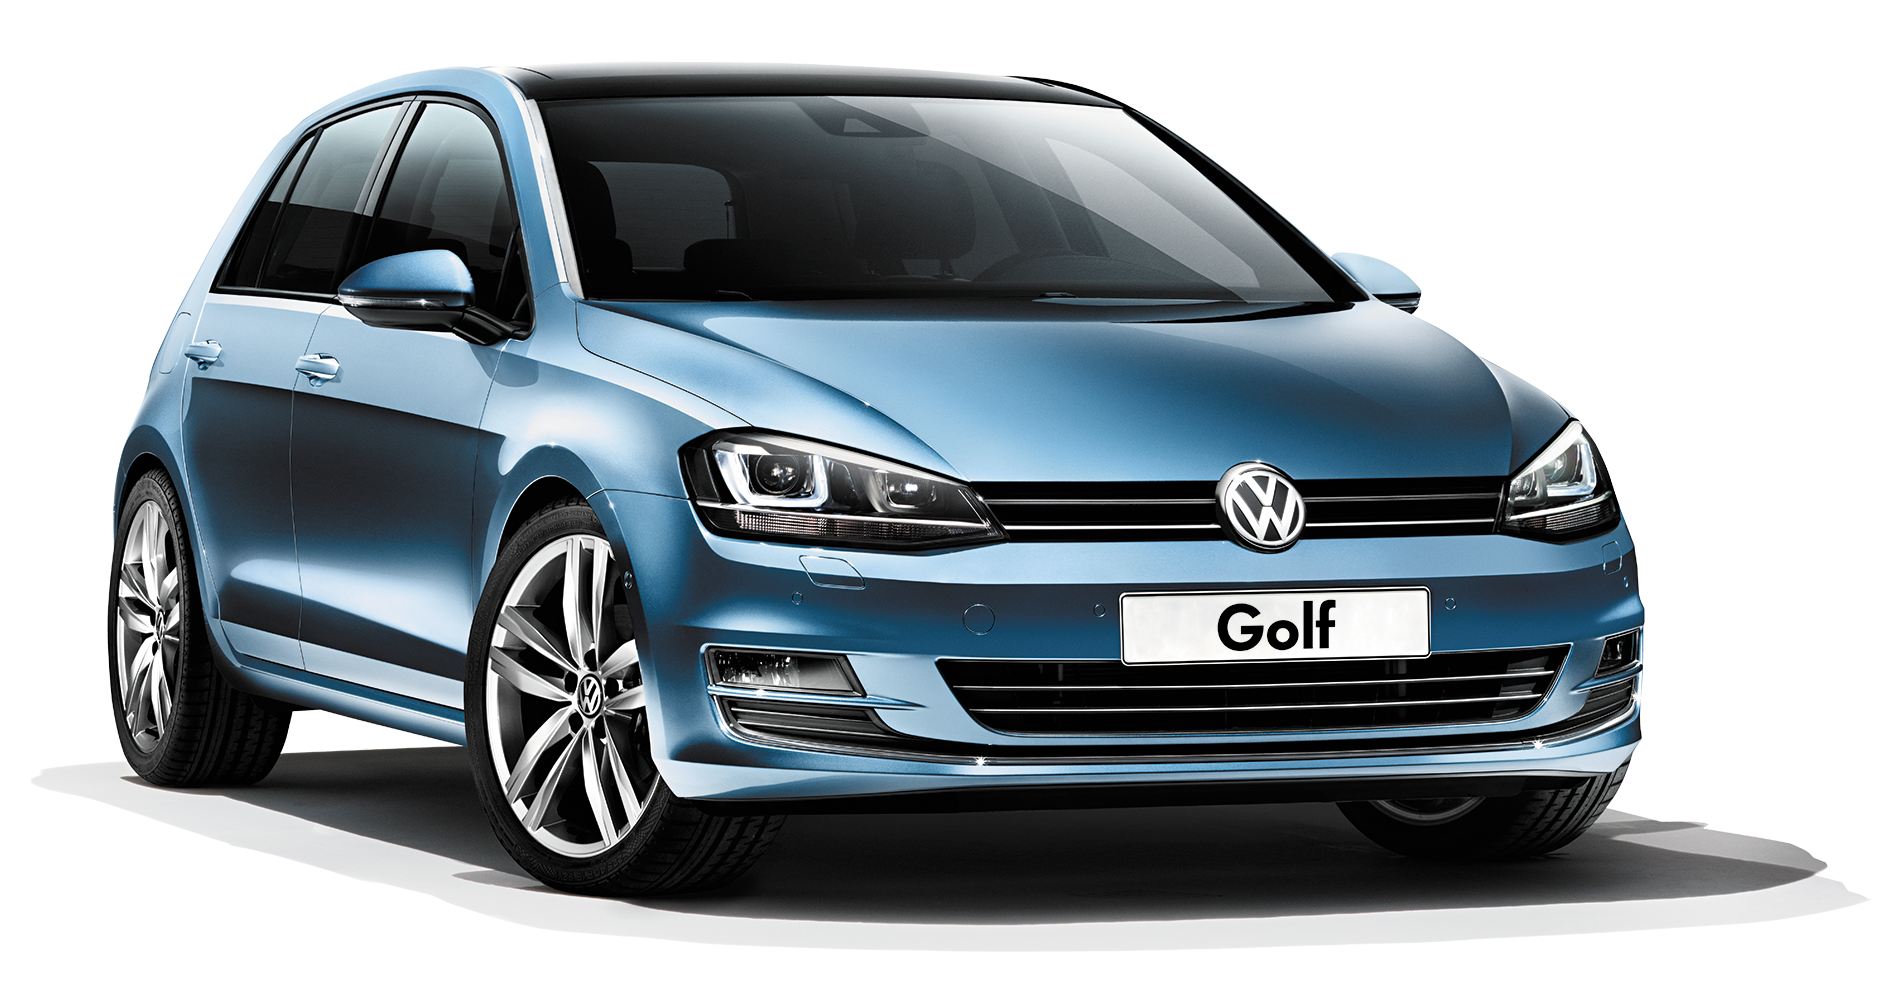 Blue Volkswagen Golf Png Car Image - Volkswagen, Transparent background PNG HD thumbnail